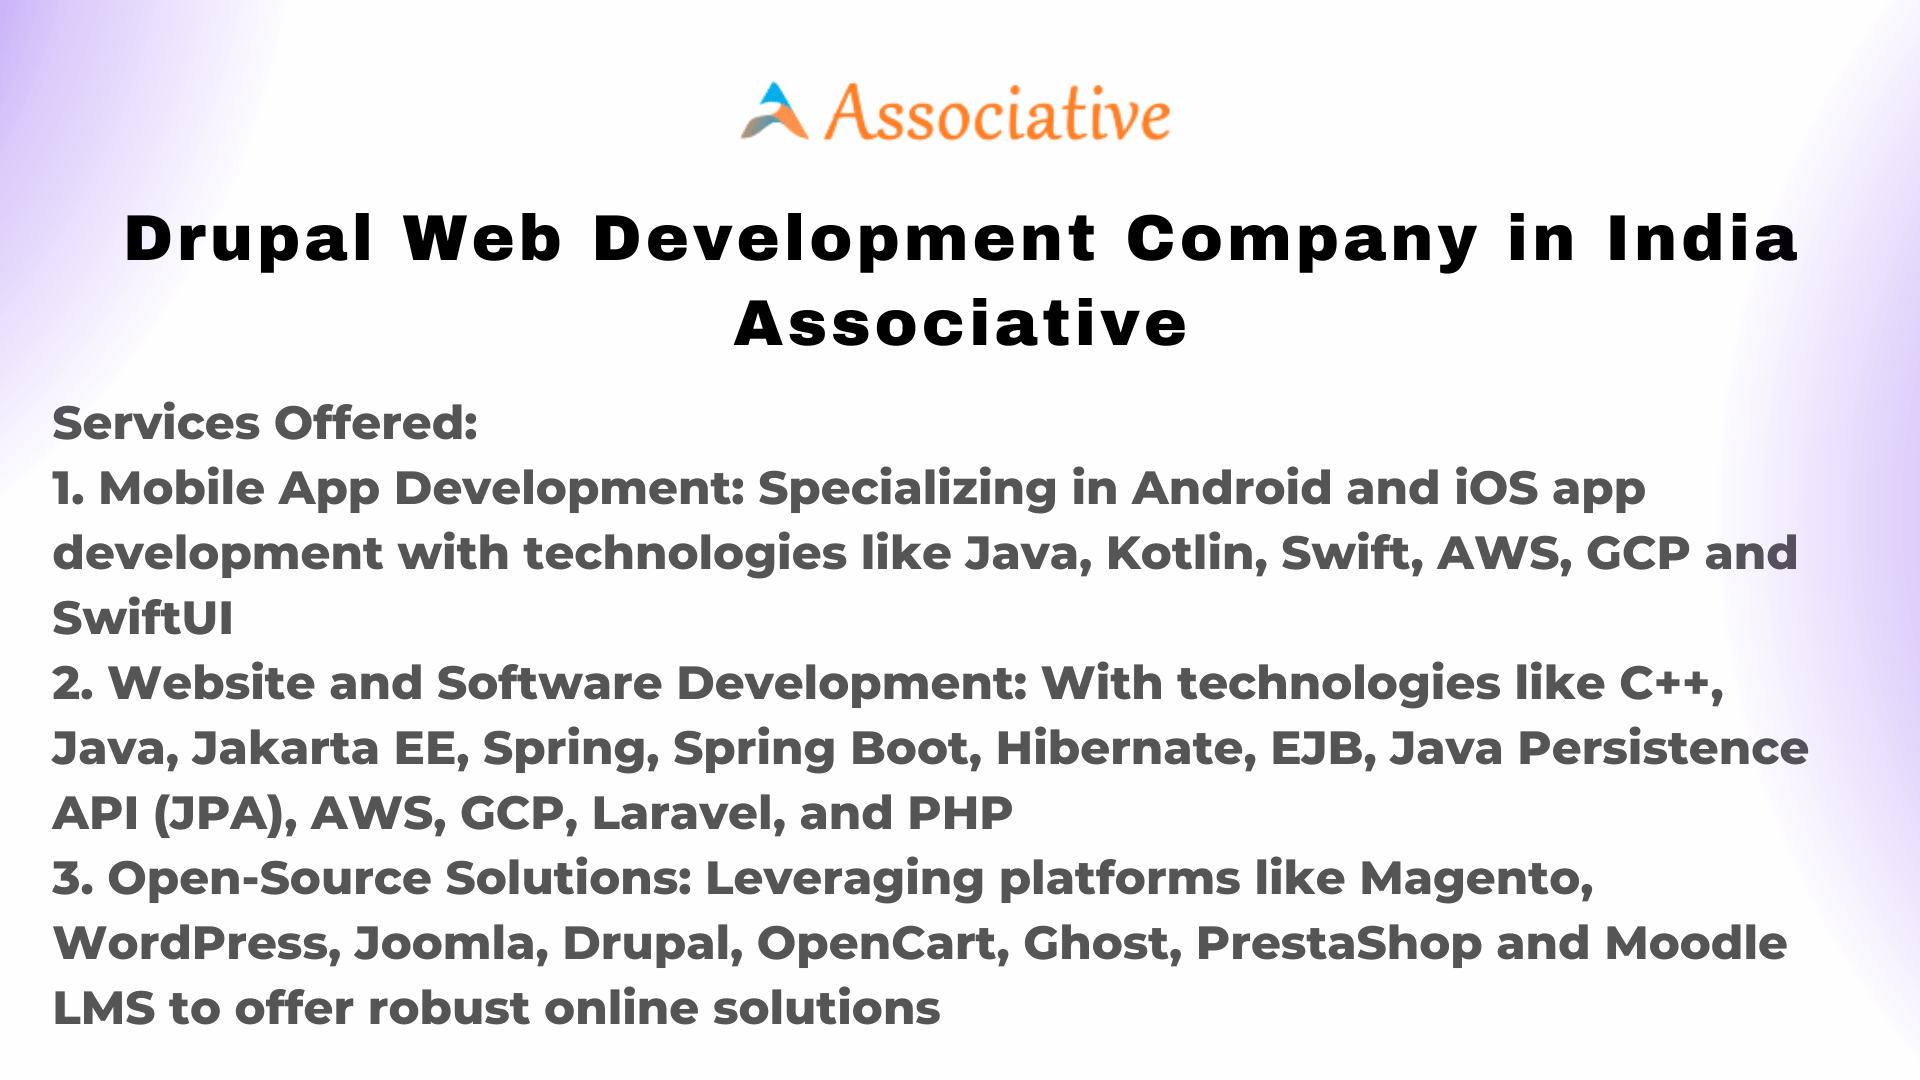 Drupal Web Development Company in India Associative